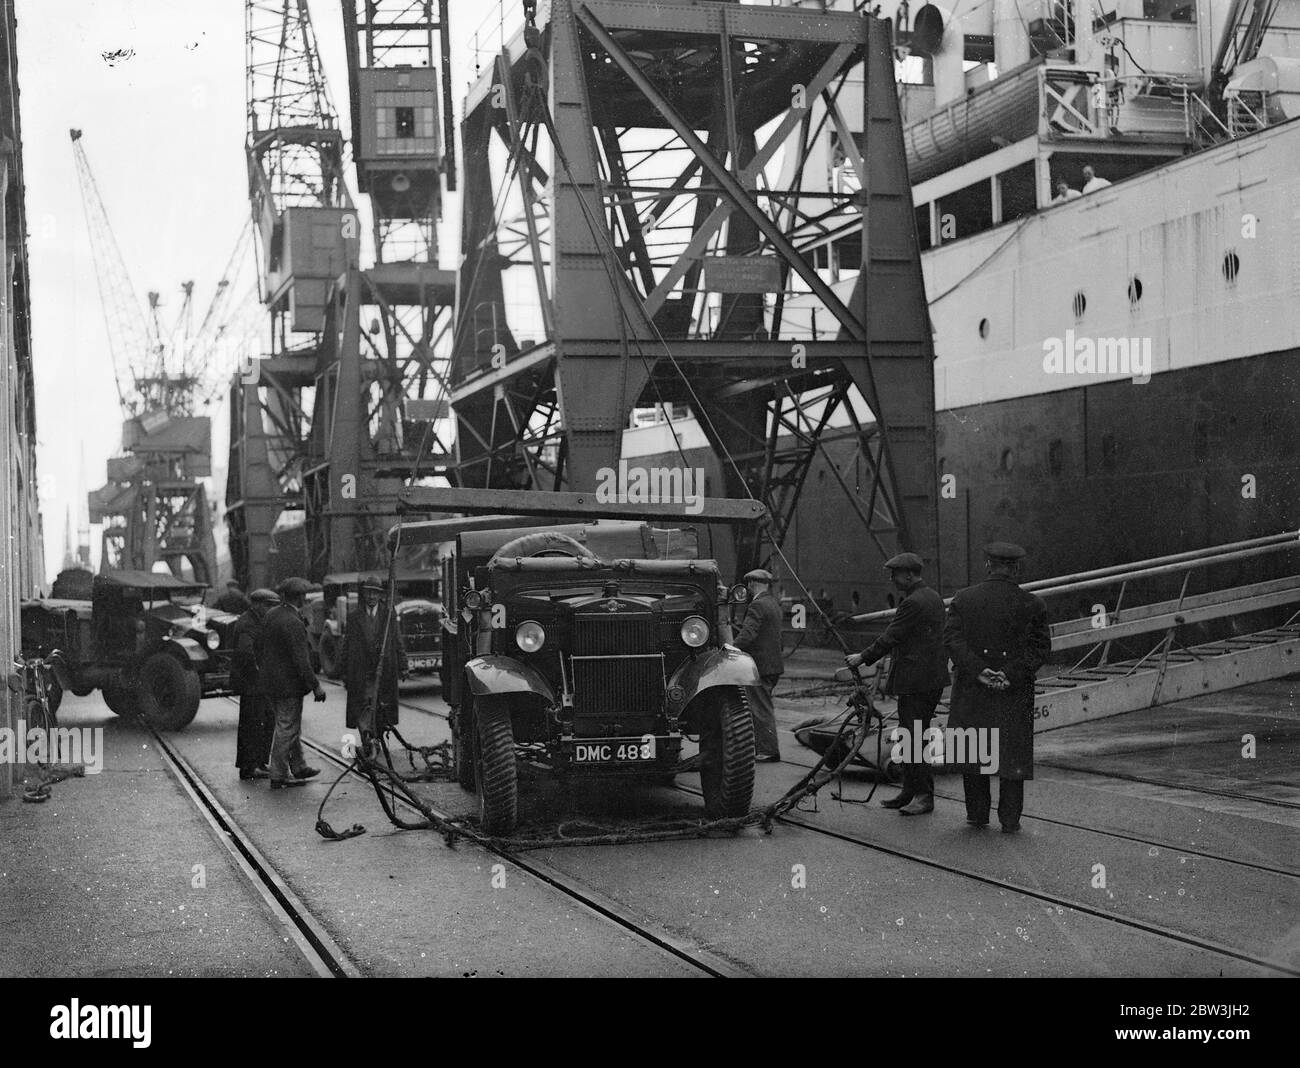 Scythia, berühmte Luxus-Liner, zur Troopship umgewandelt. Armee Lastwagen geladen . Armee Lastwagen neben Scythia, in Southampton, bereit, an Bord geschwungen werden. Januar 1936 Stockfoto